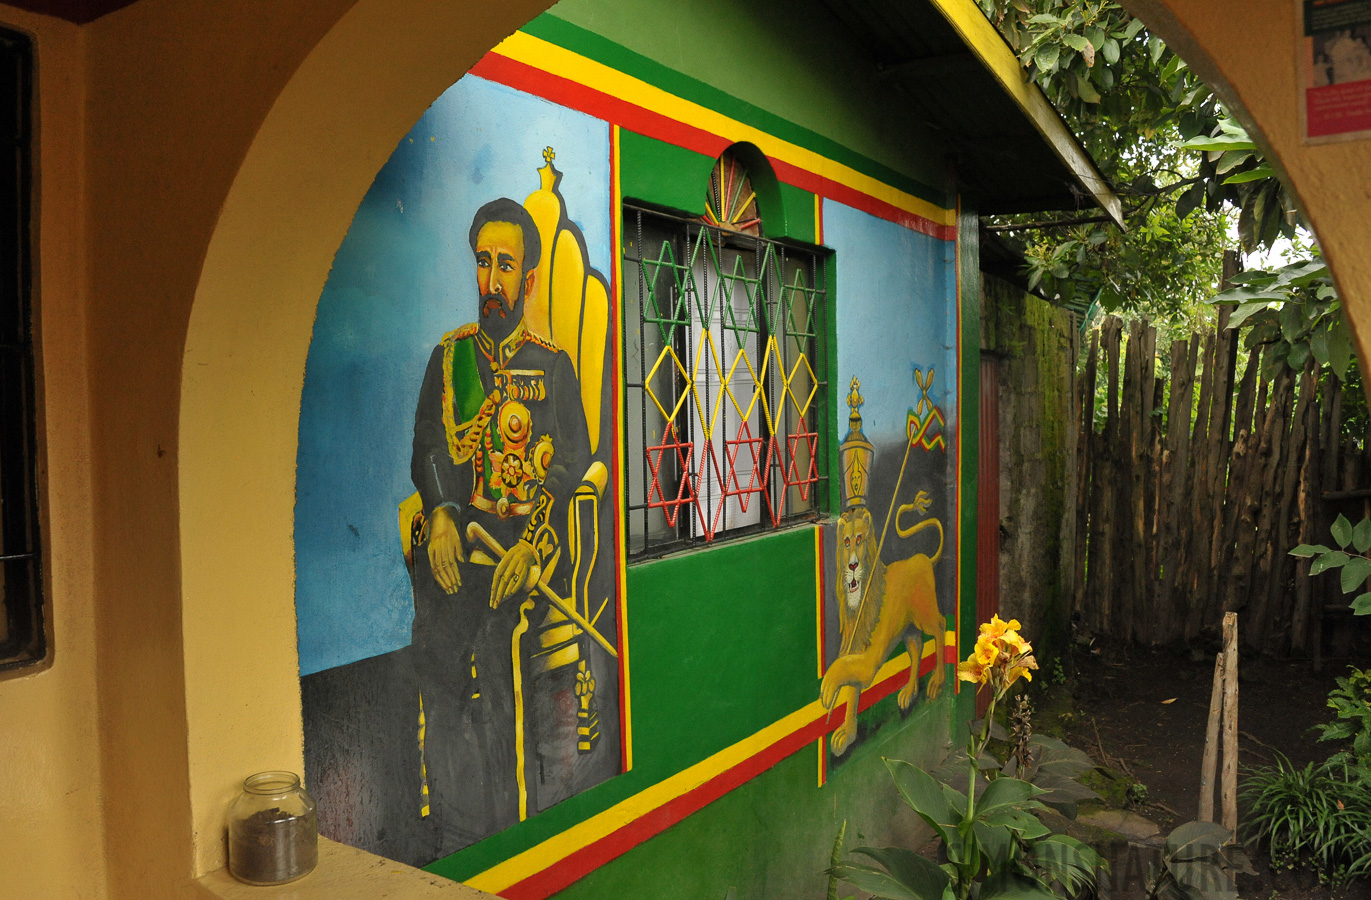 Rastafari Kirche [28 mm, 1/640 Sek. bei f / 8.0, ISO 3200]